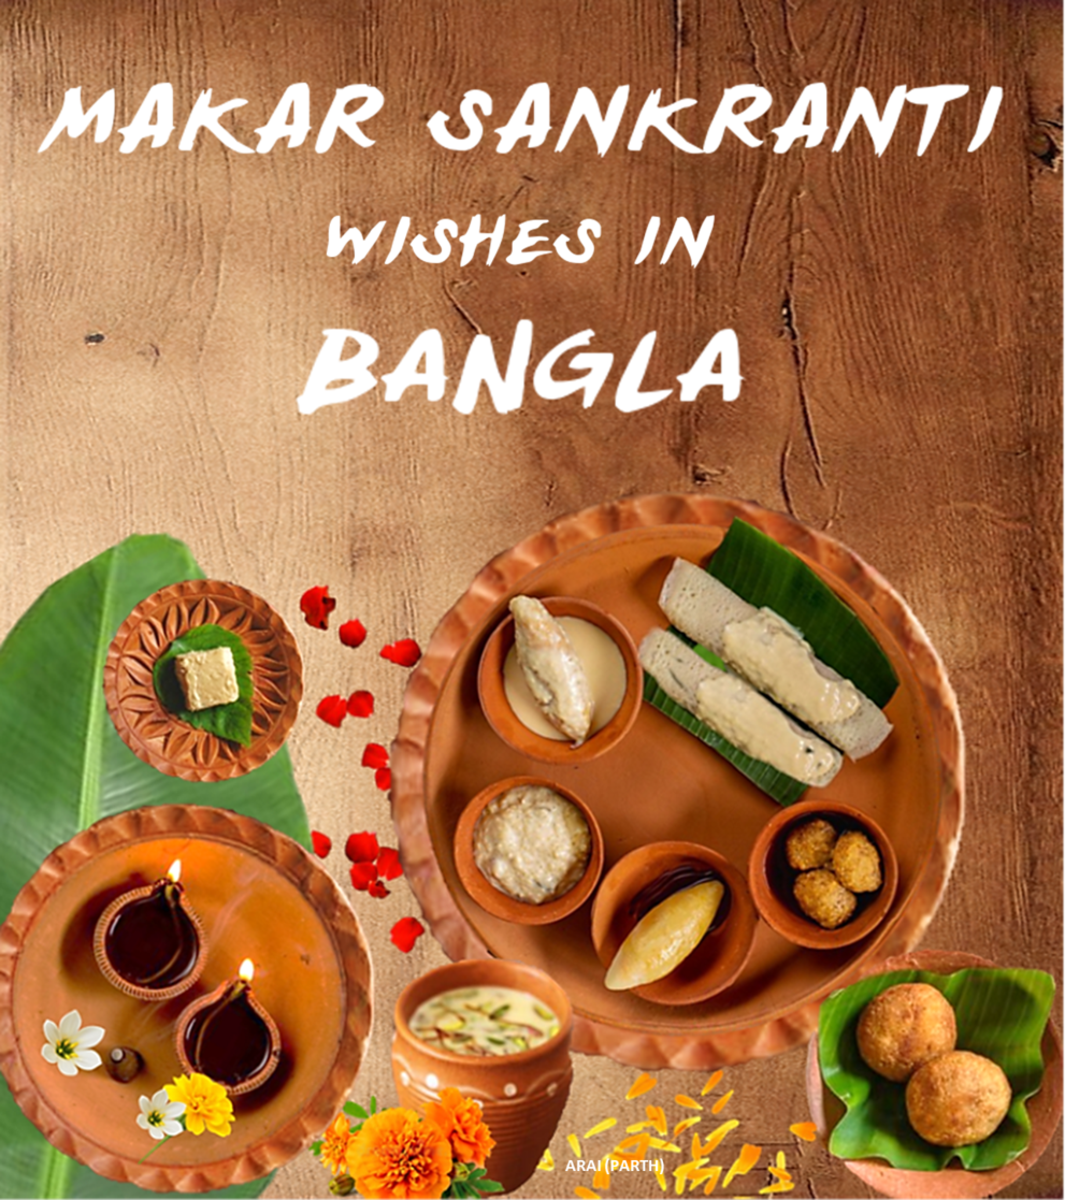 Makar Sankranti Wishes and Greetings in Bangla, Bengali Language